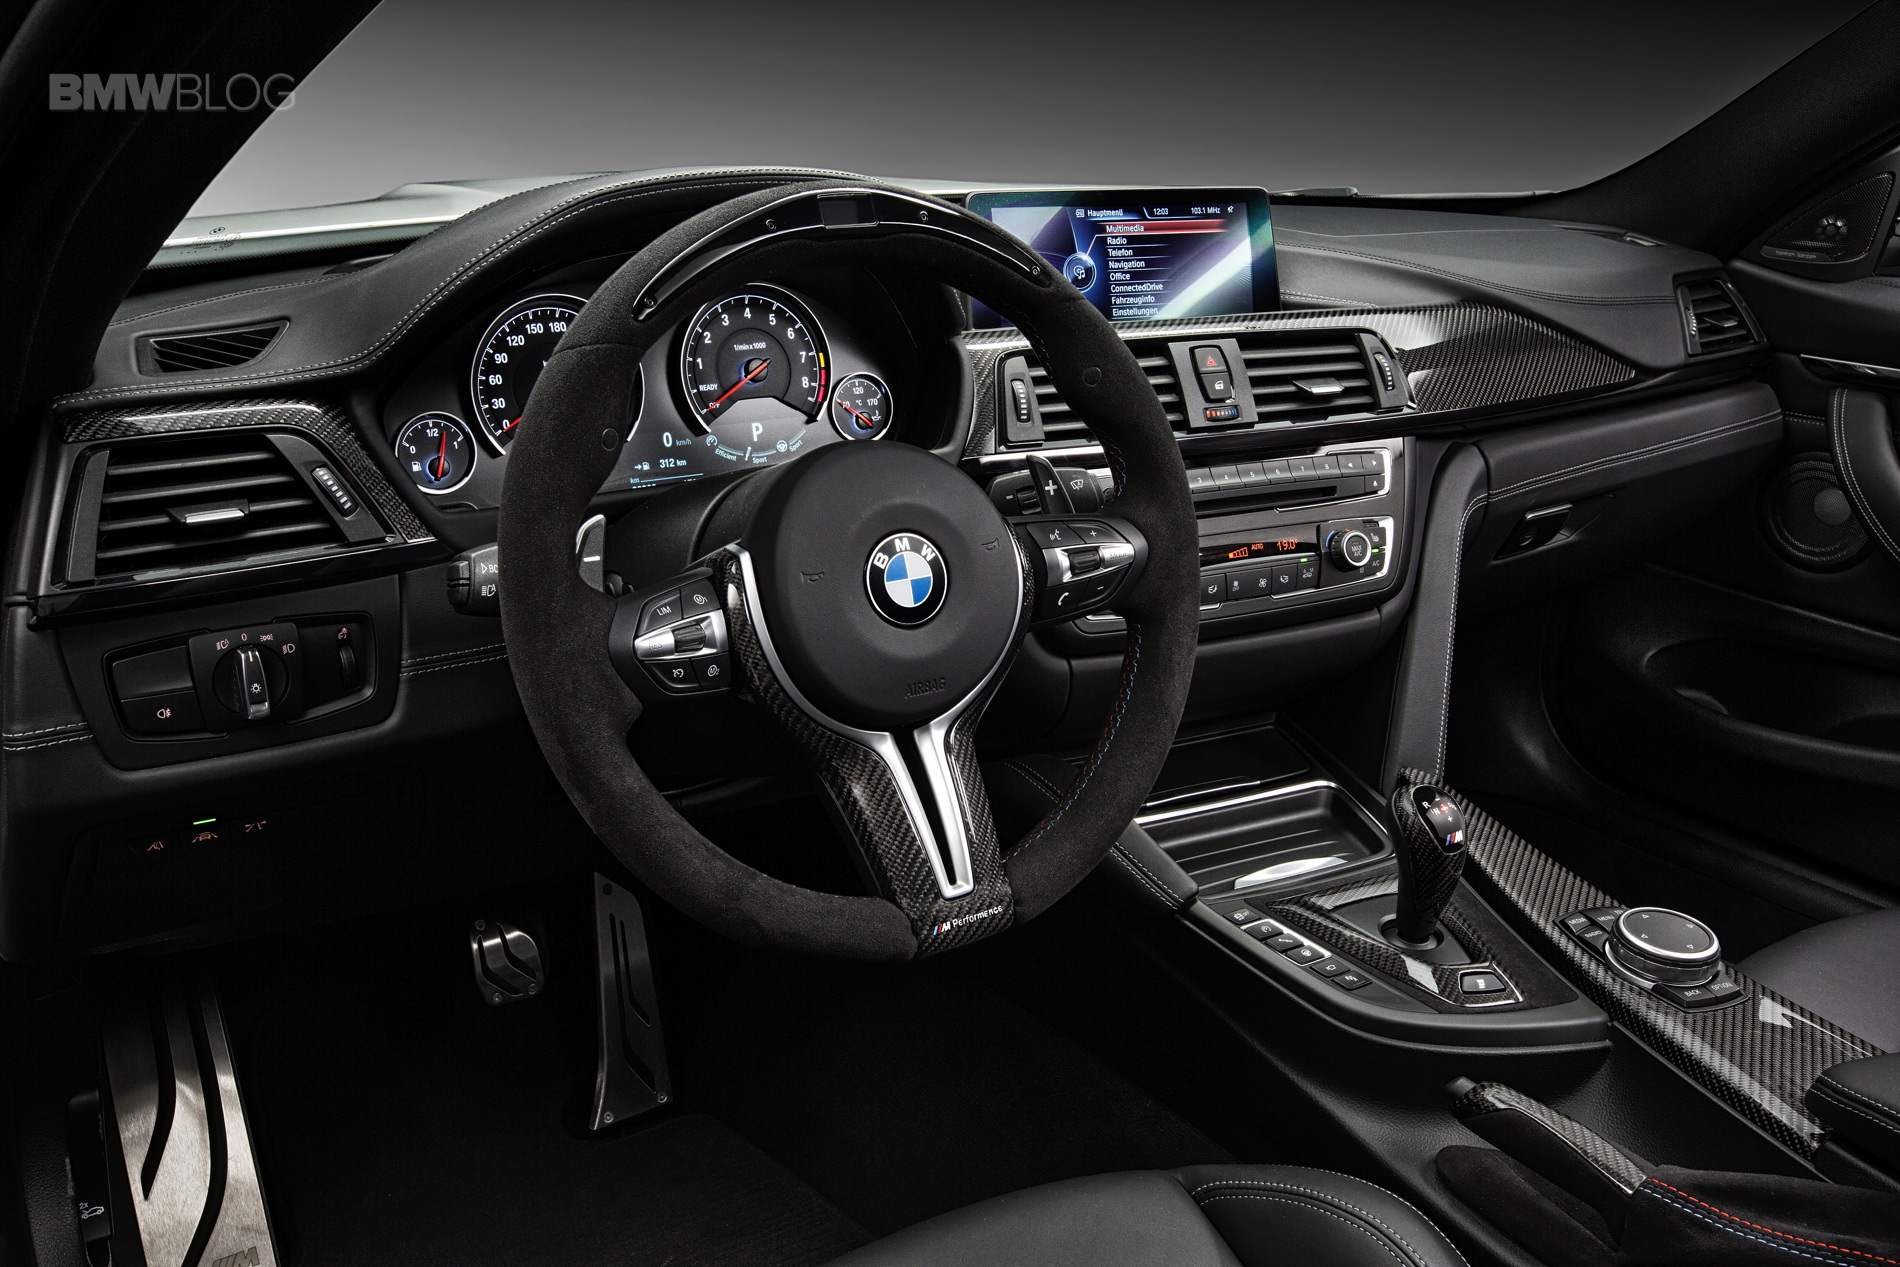 BMW M4 F82: Einbau M Performance Lenkrad mit Race-Display +